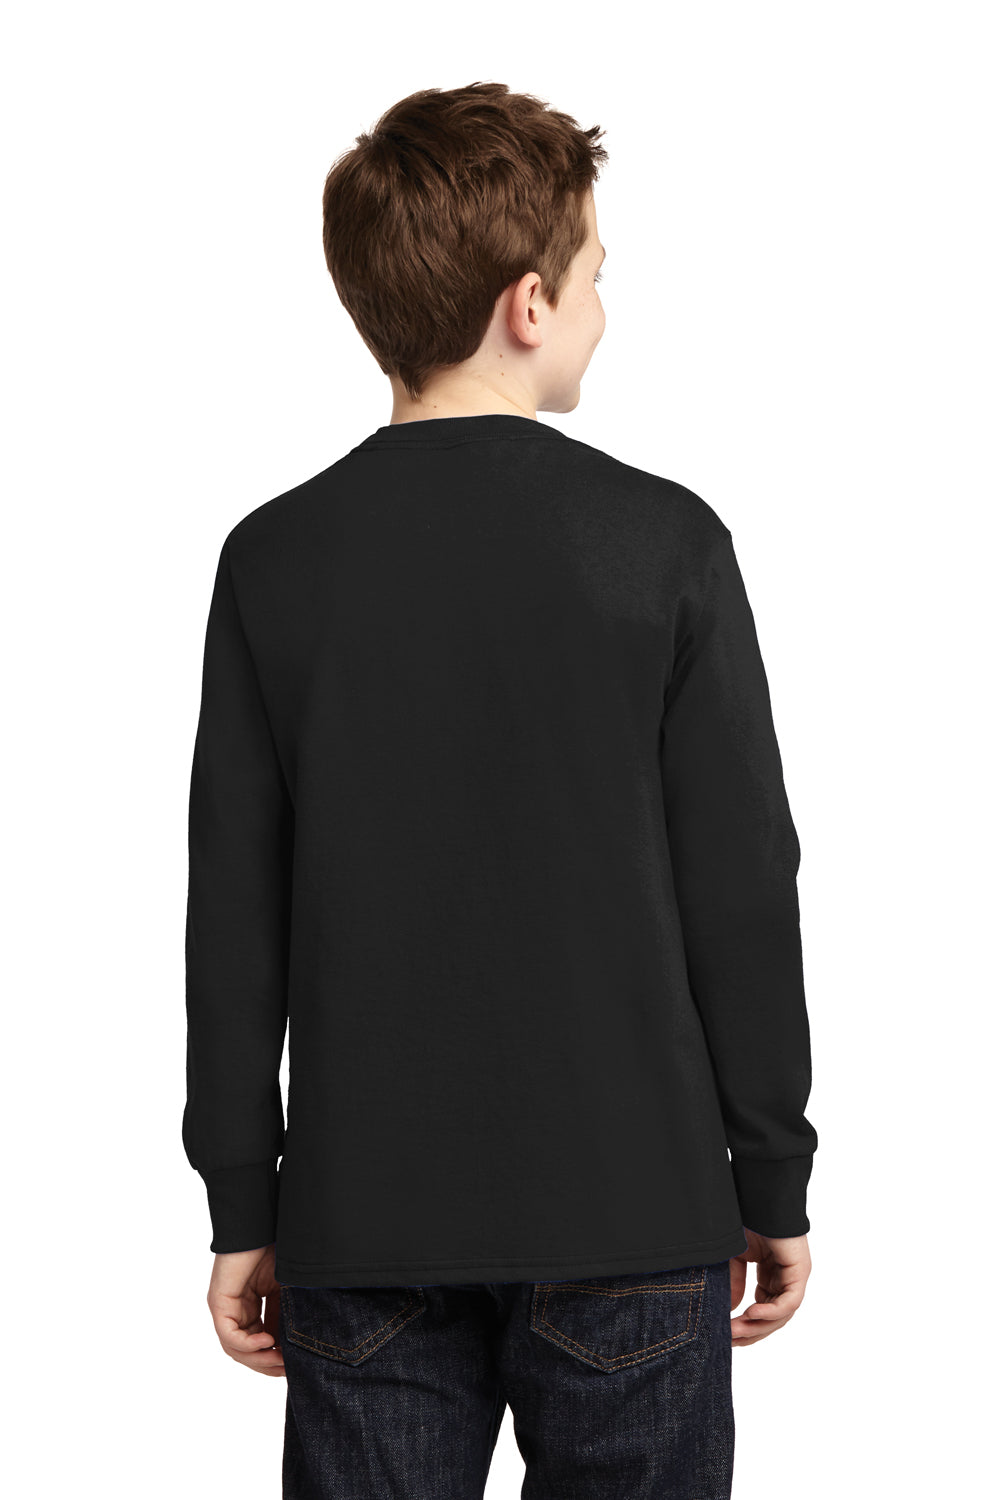 Port & Company PC54YLS Youth Core Long Sleeve Crewneck T-Shirt Black Back